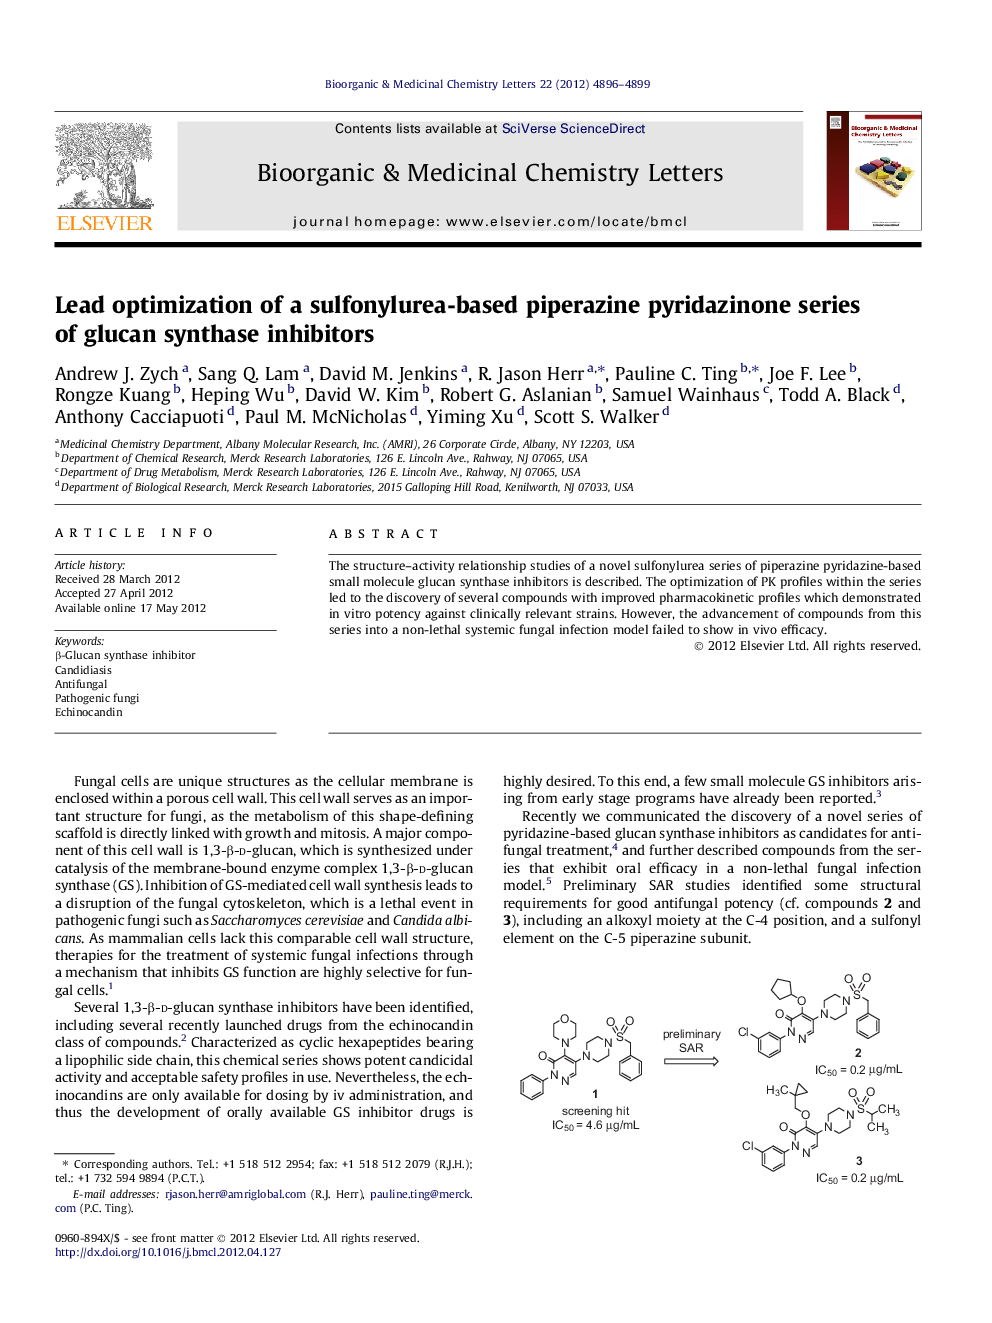 Lead optimization of a sulfonylurea-based piperazine pyridazinone series of glucan synthase inhibitors